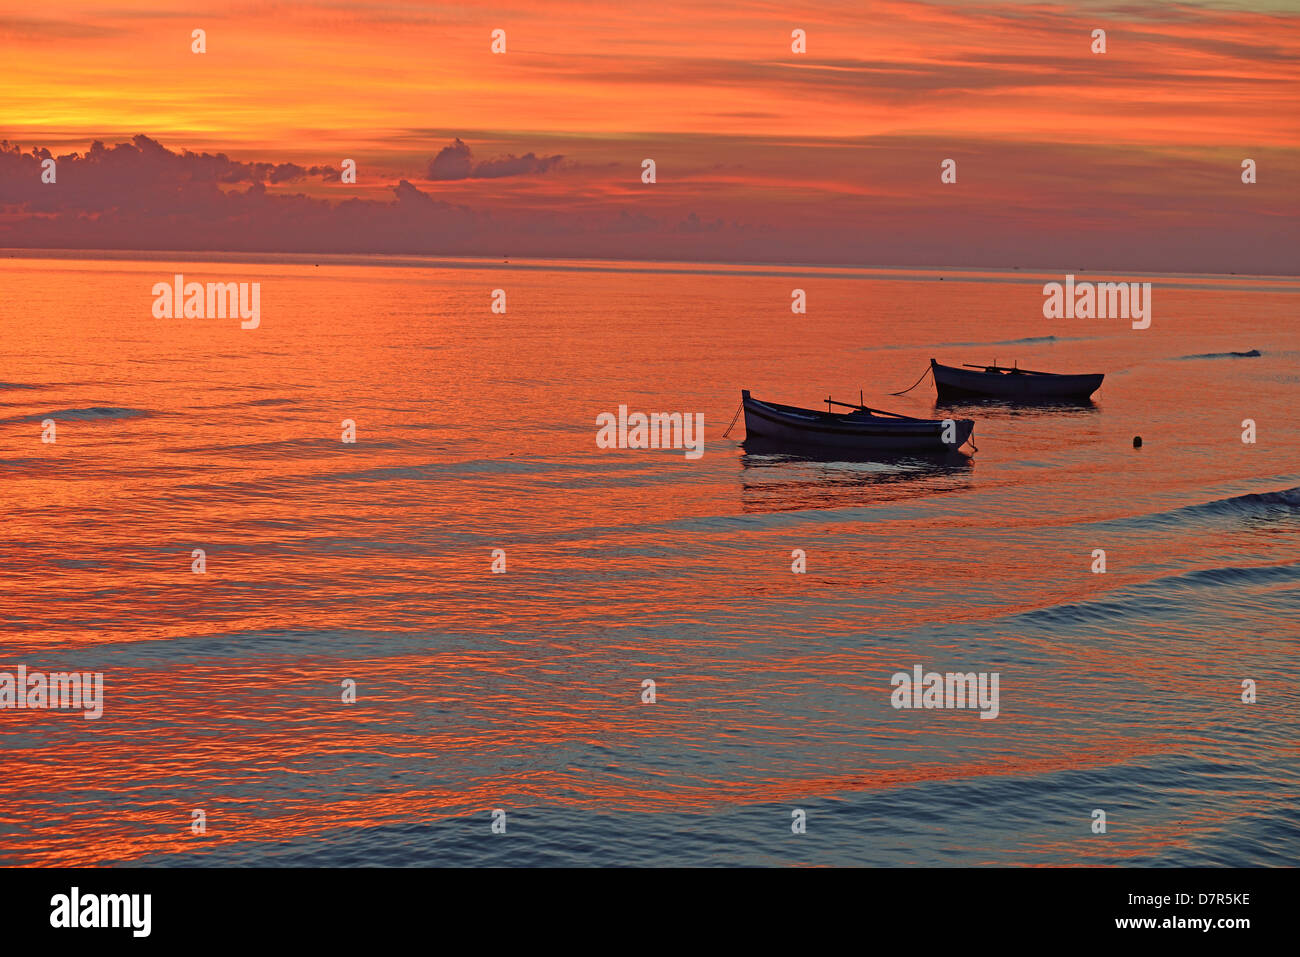 Boats at sunrise, Mediterranean, Zarzis, Tunisia. Stock Photo